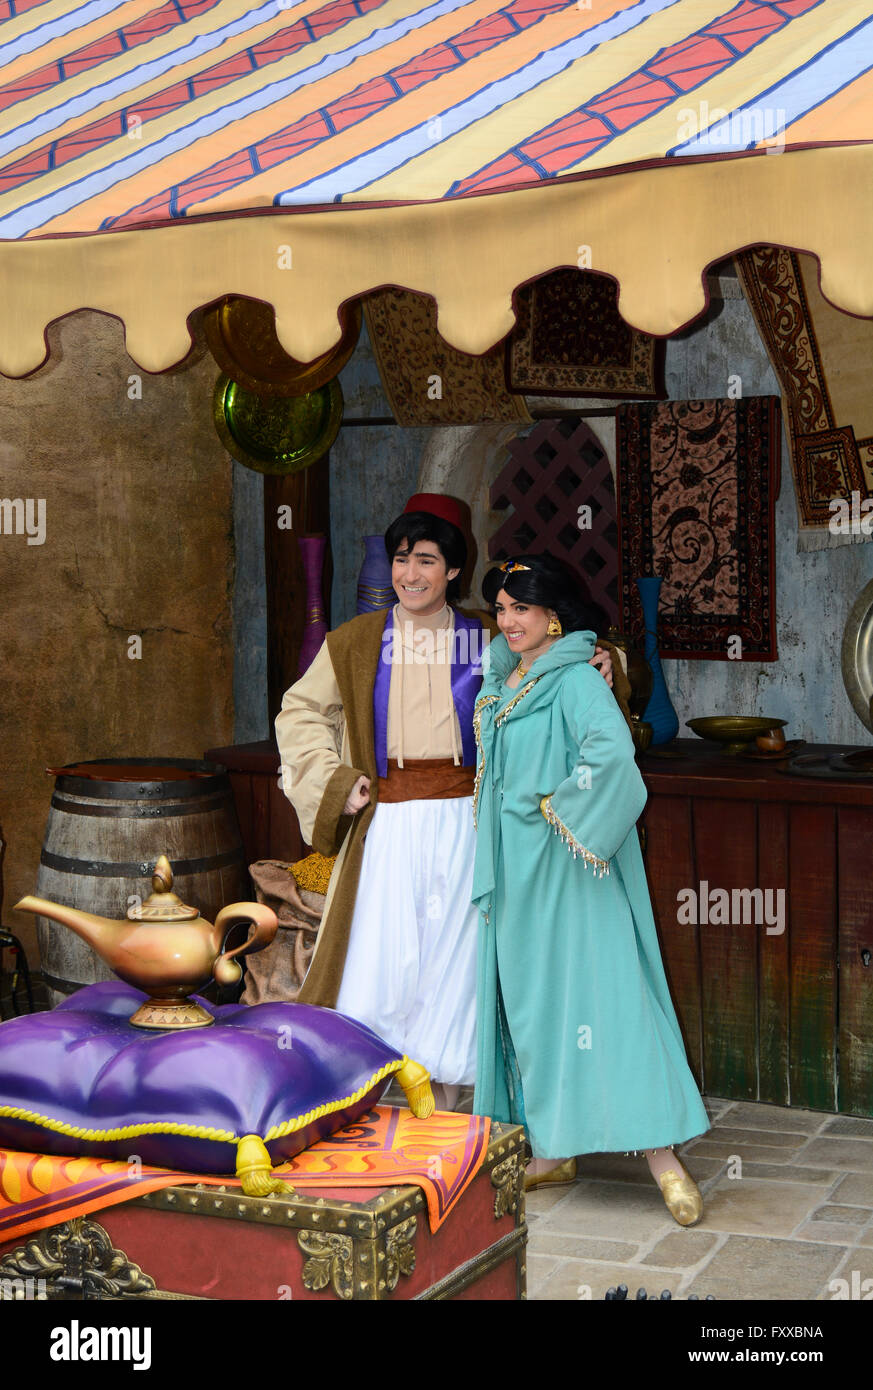 Aladdin and jasmine at Adventure land disneyland paris france with genie lamp Stock Photo